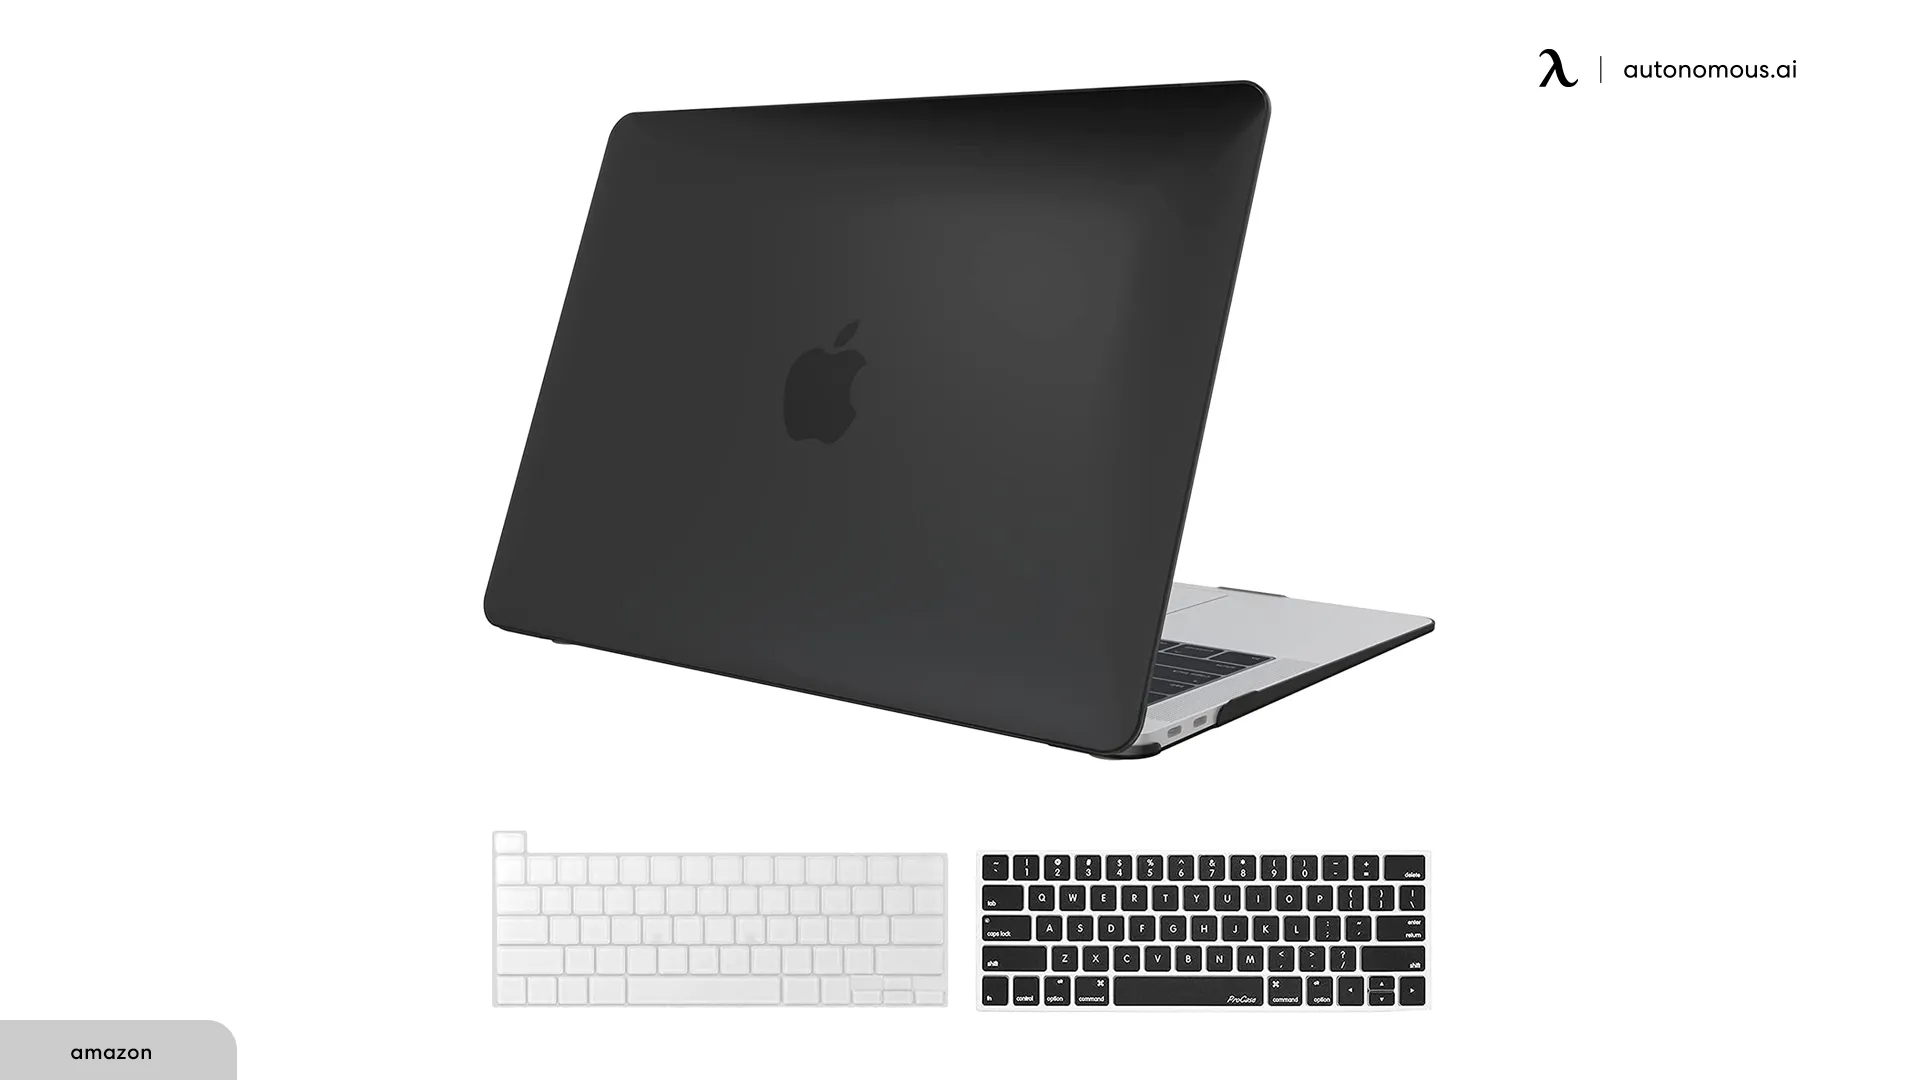 ProCase MacBook Pro 13 Case